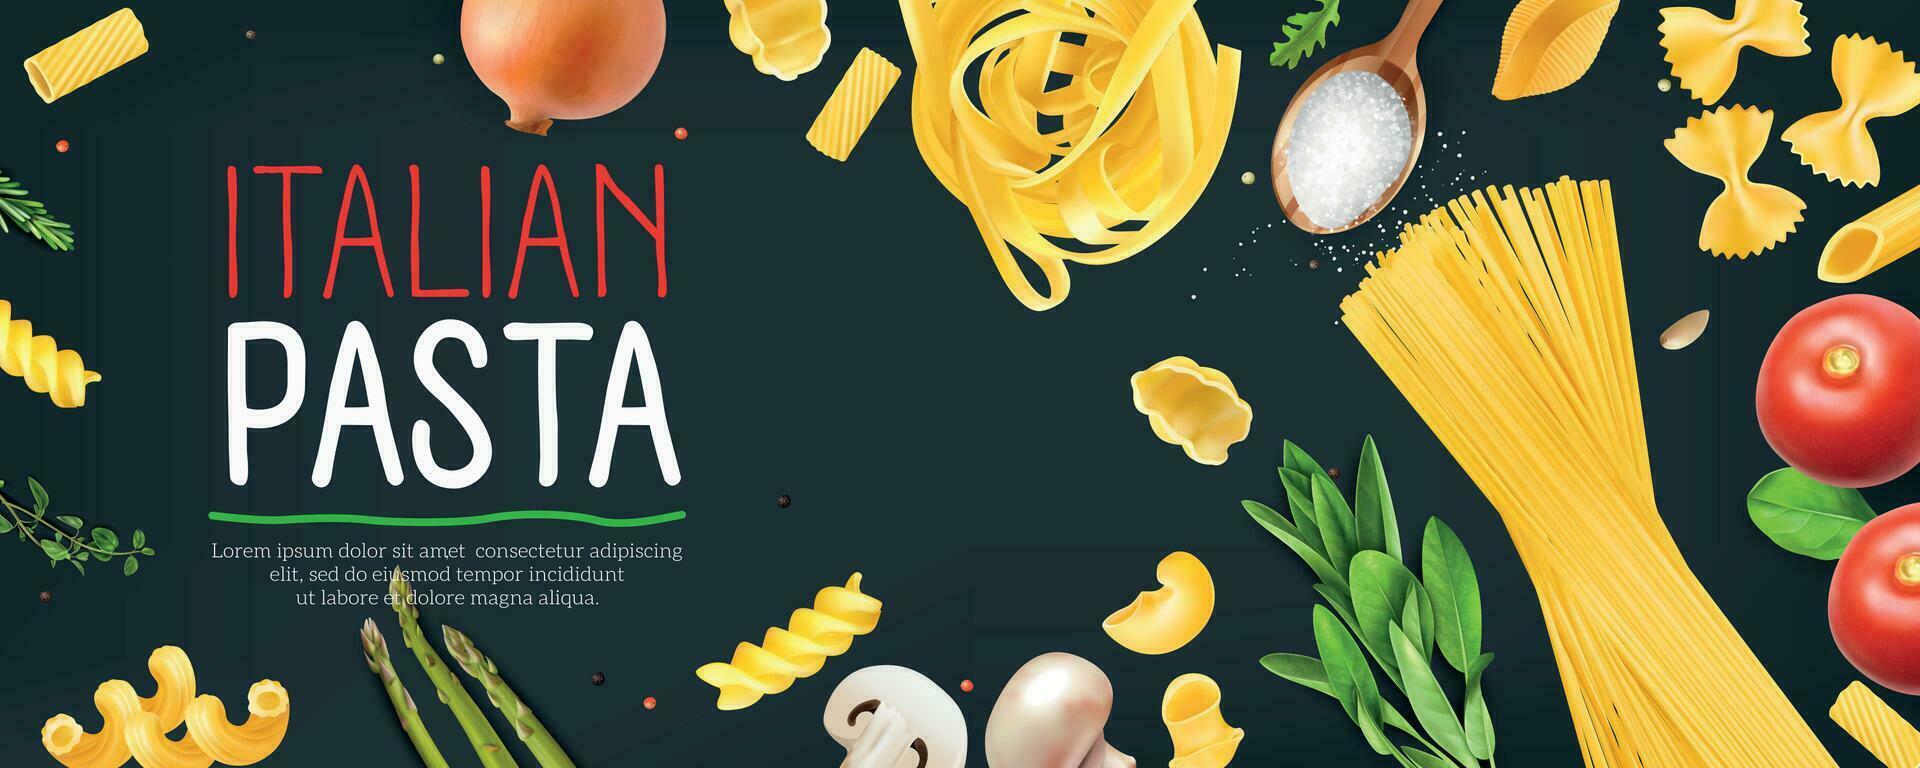 realistisch Pasta horizontal Poster vektor